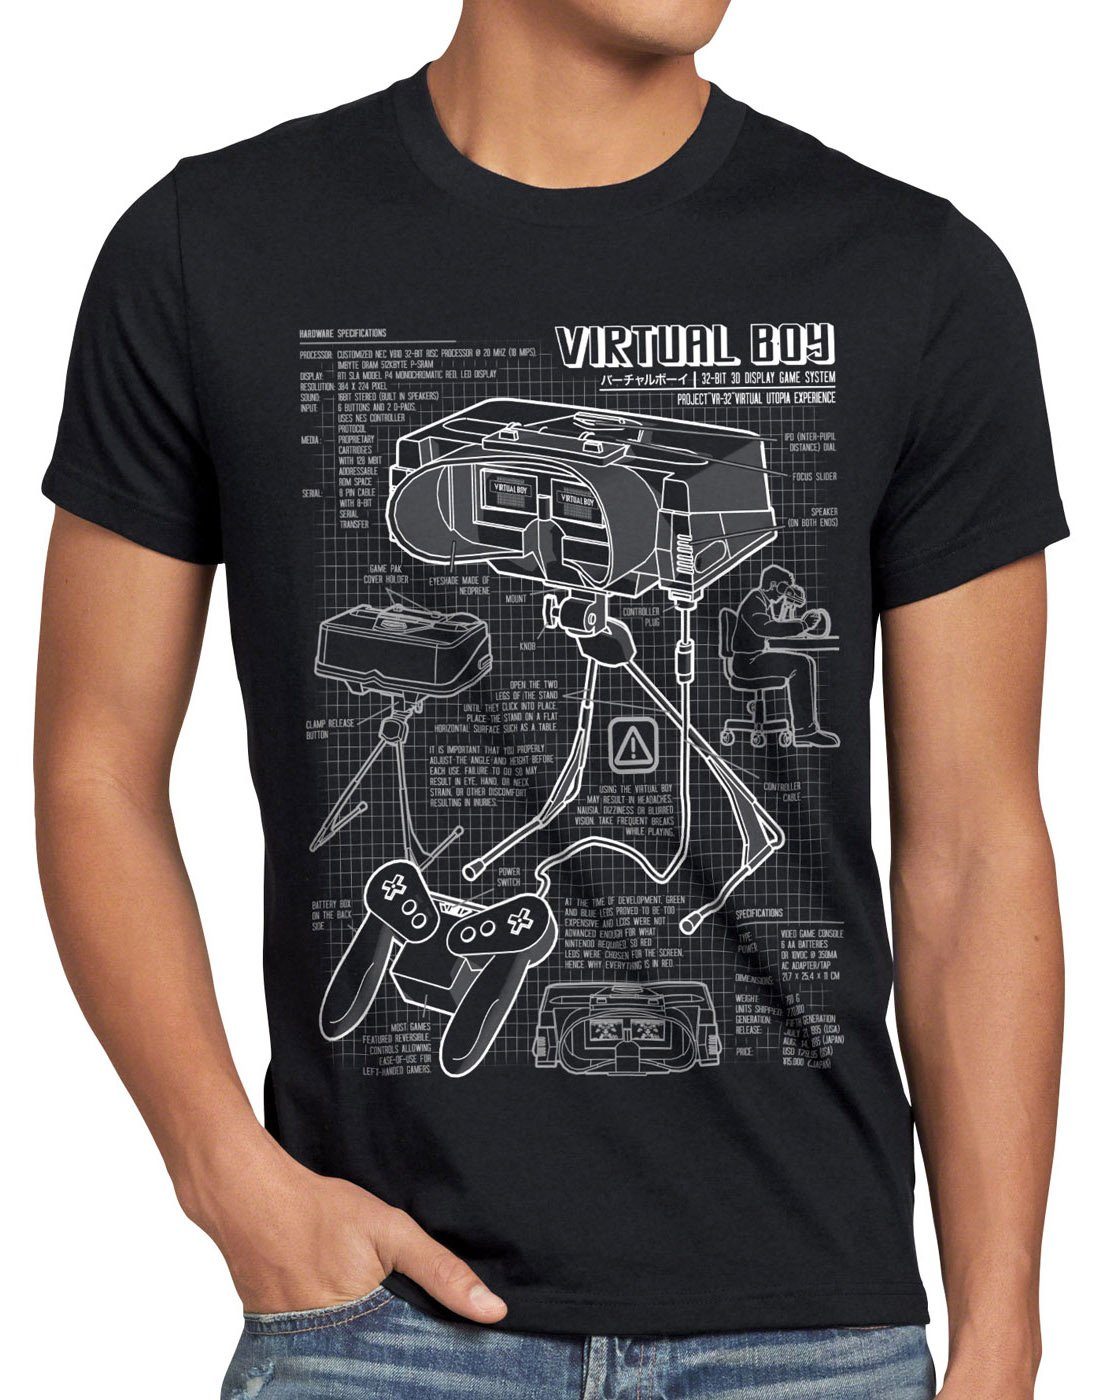 Boy style3 nintendo videospiel T-Shirt nes Print-Shirt konsole schwarz gamer Herren Virtual n64 super 32Bit